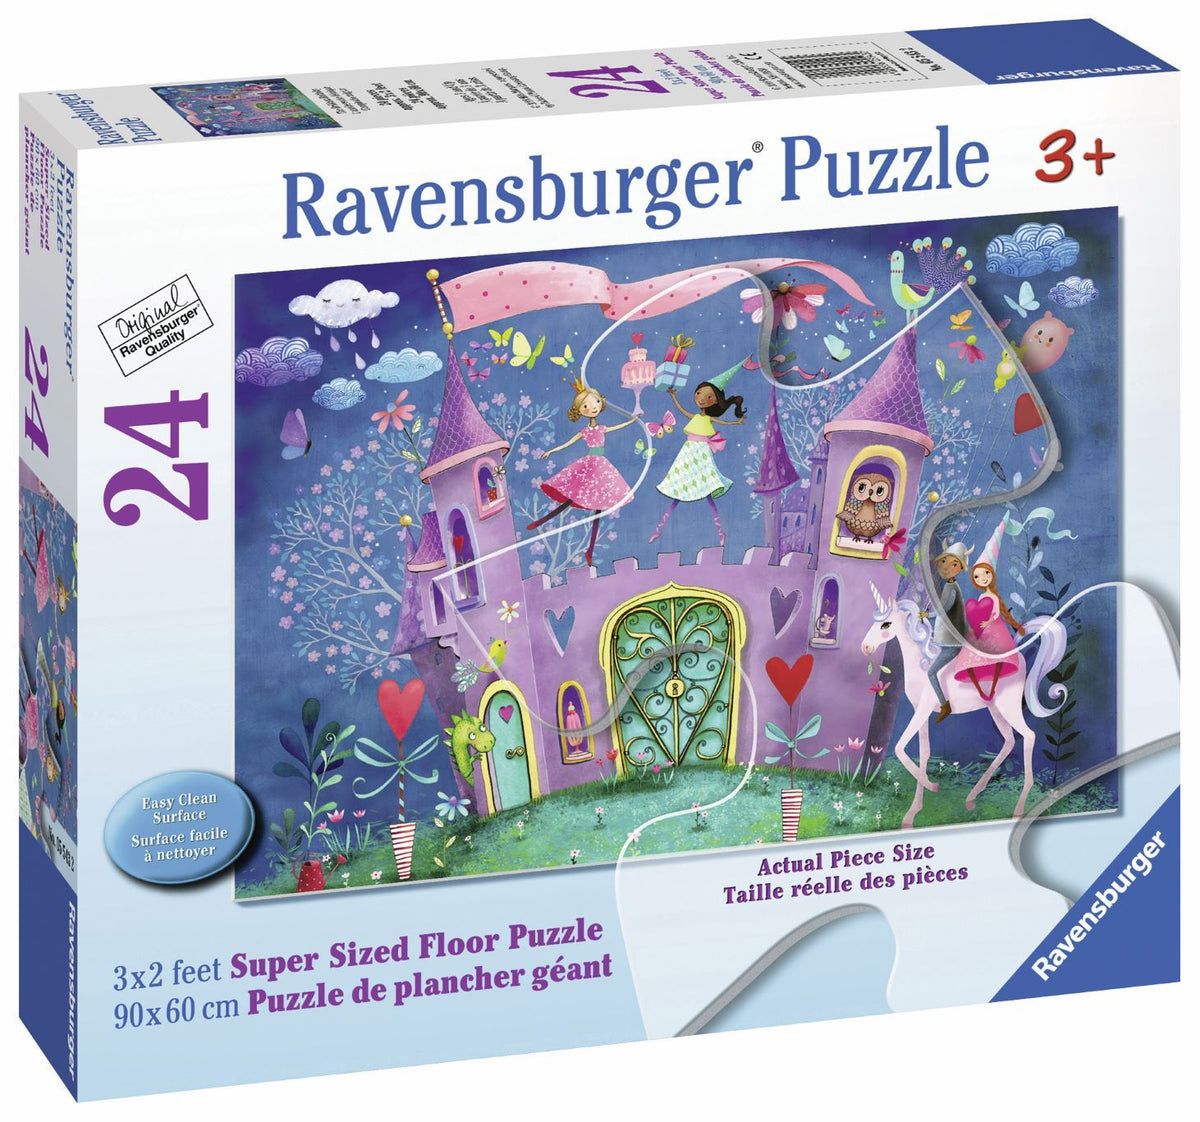 Billiant Birthday Supersize Puzzle 24pc (Ravensburger Puzzle)